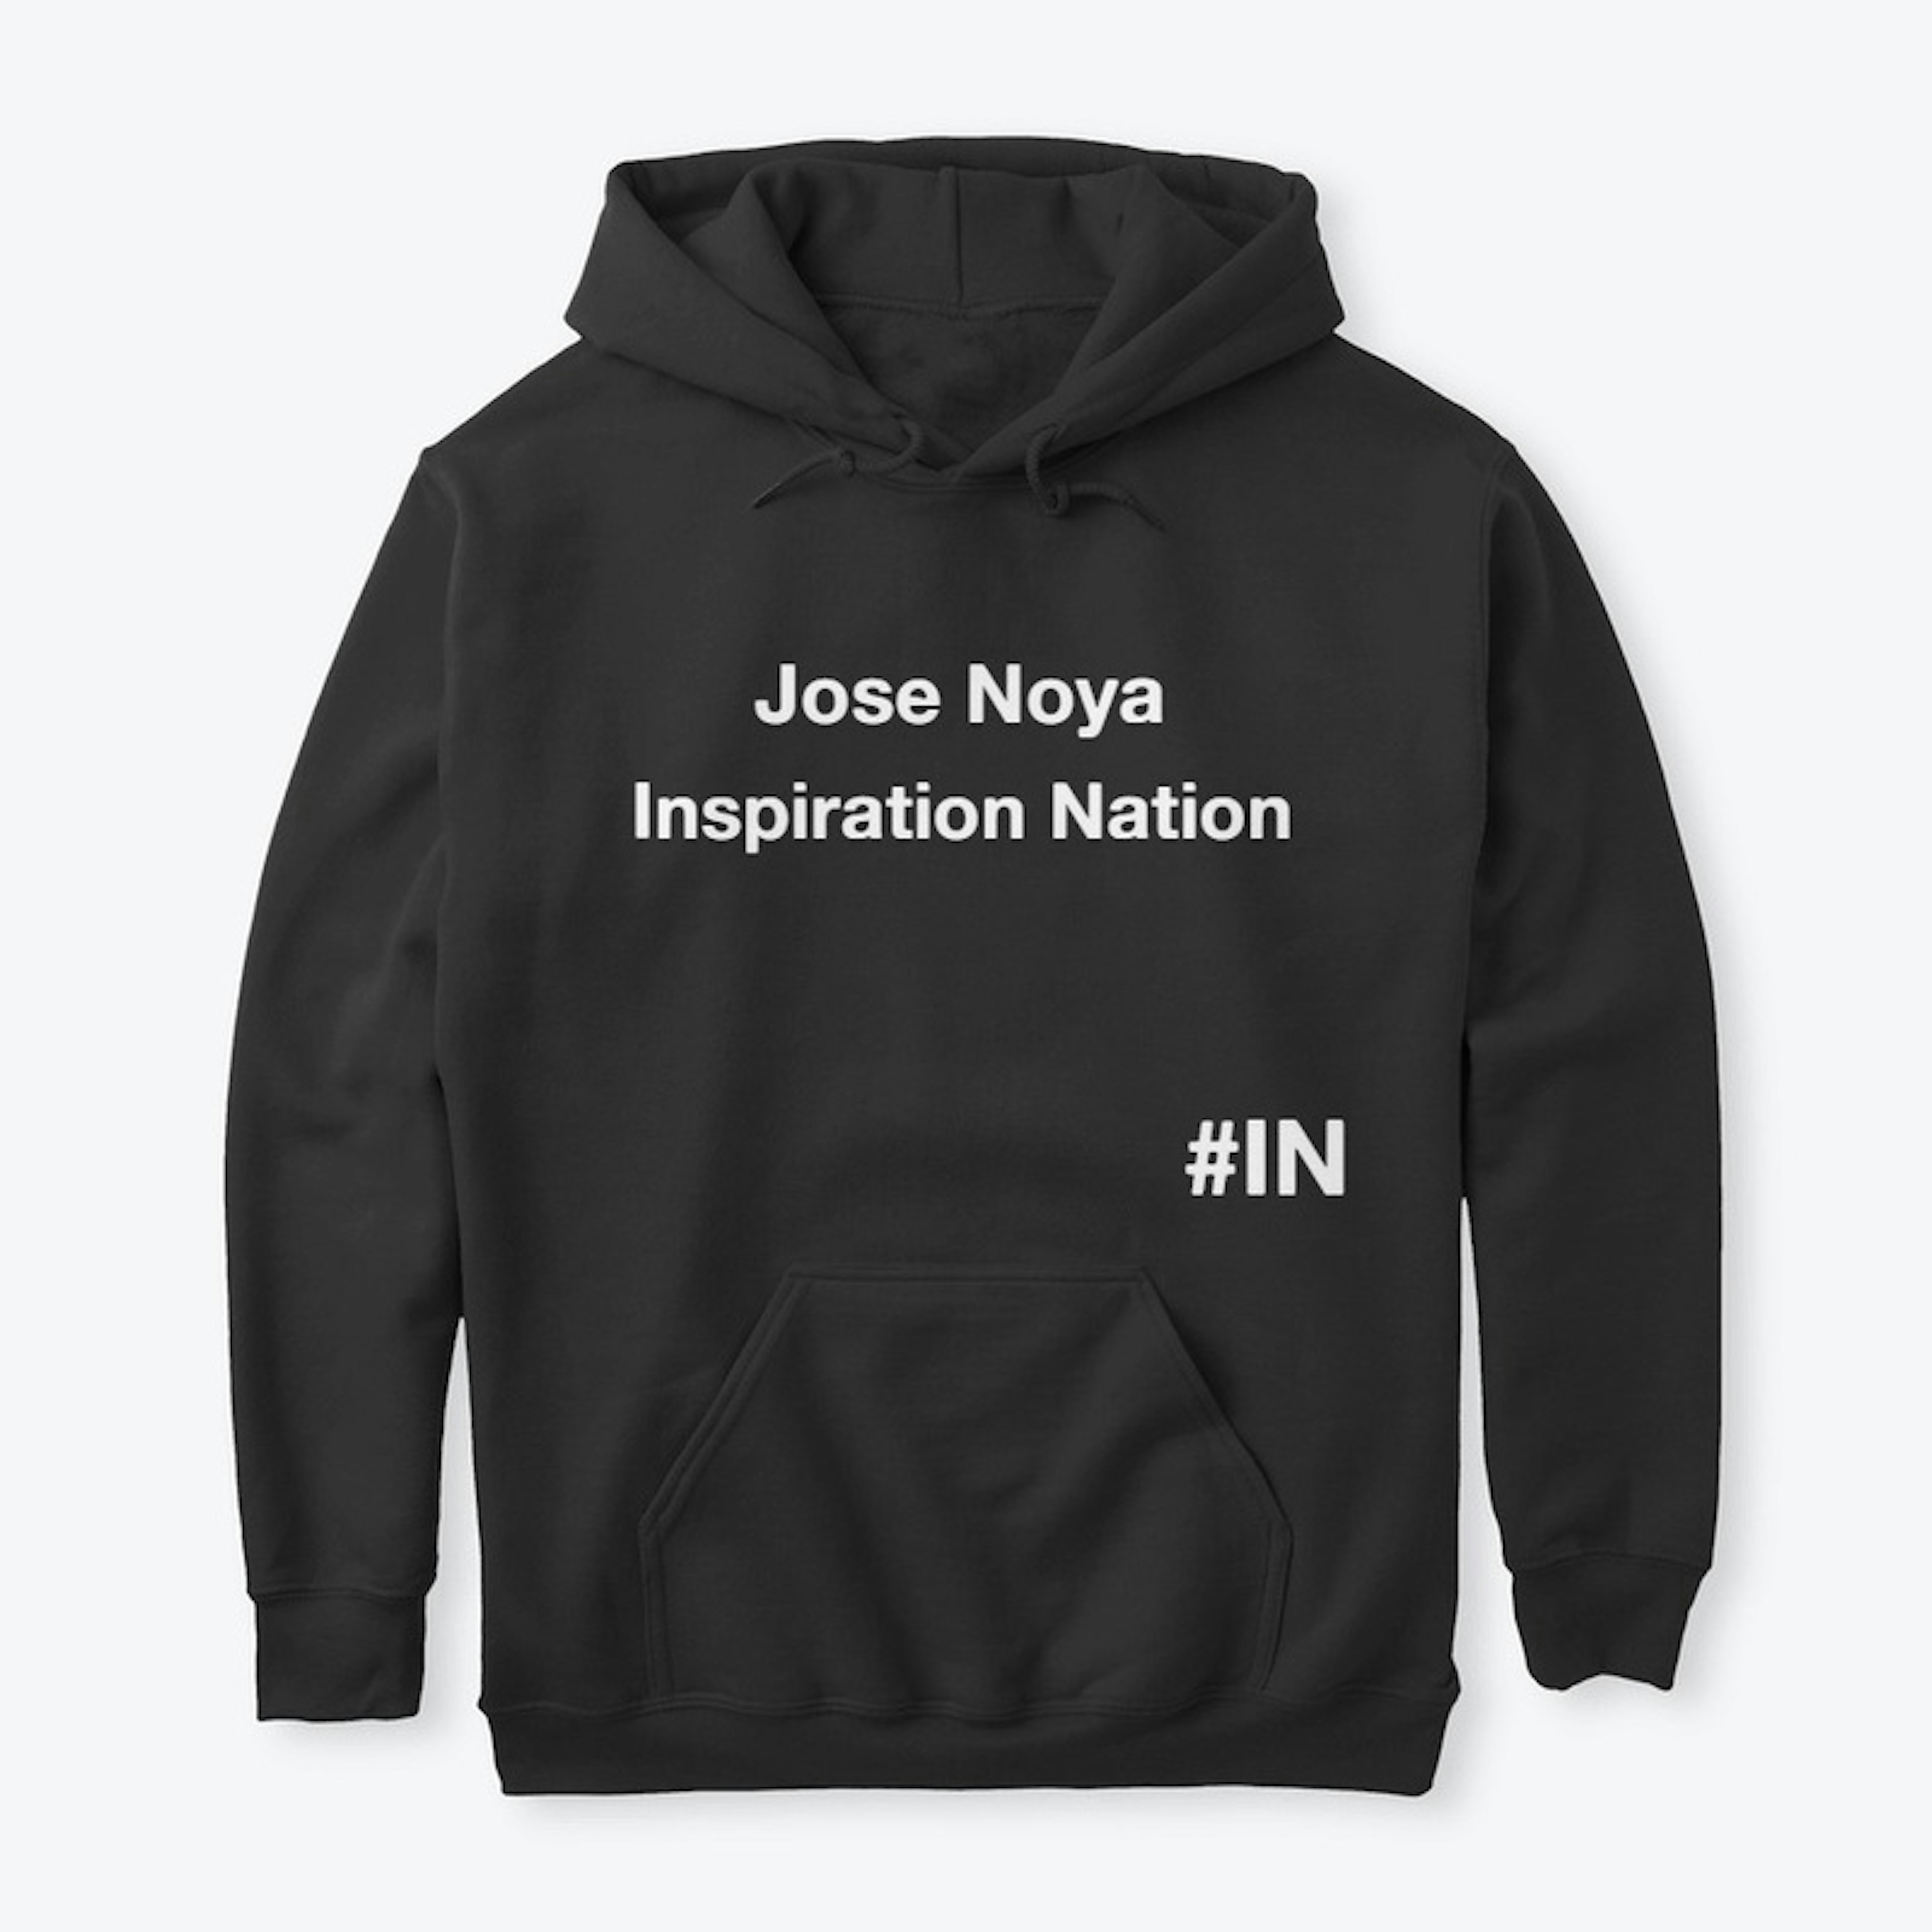 Jose Noya Collection